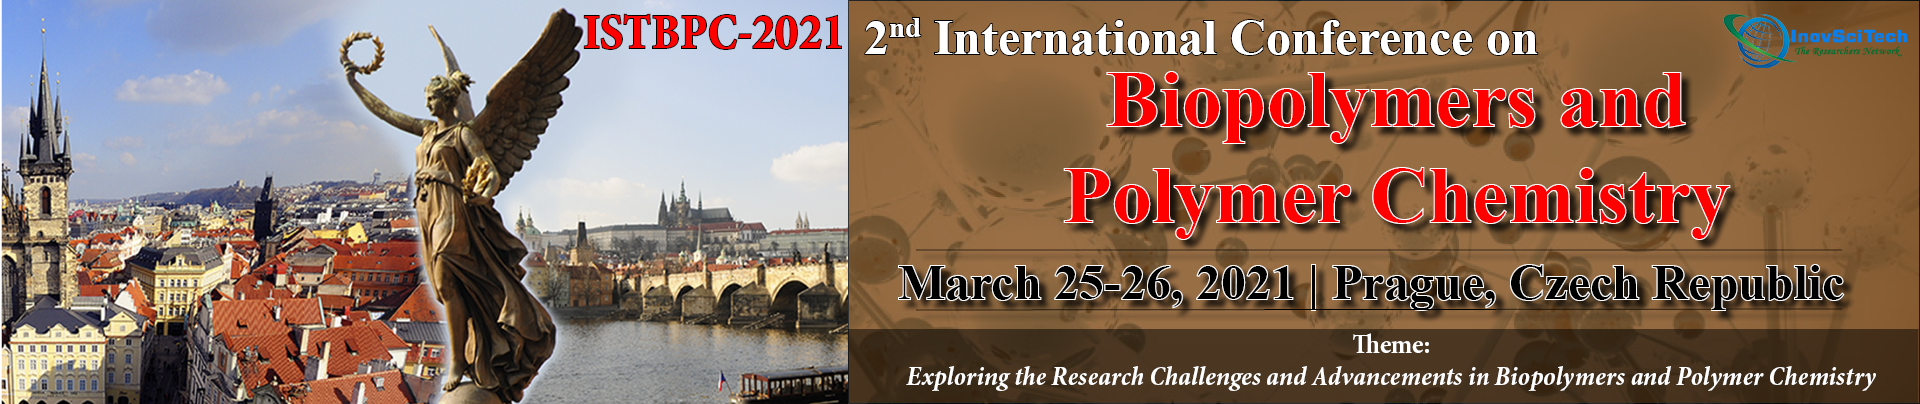 2nd International Conference on Biopolymers and Polymer Chemistry, Prague, Czech Republic